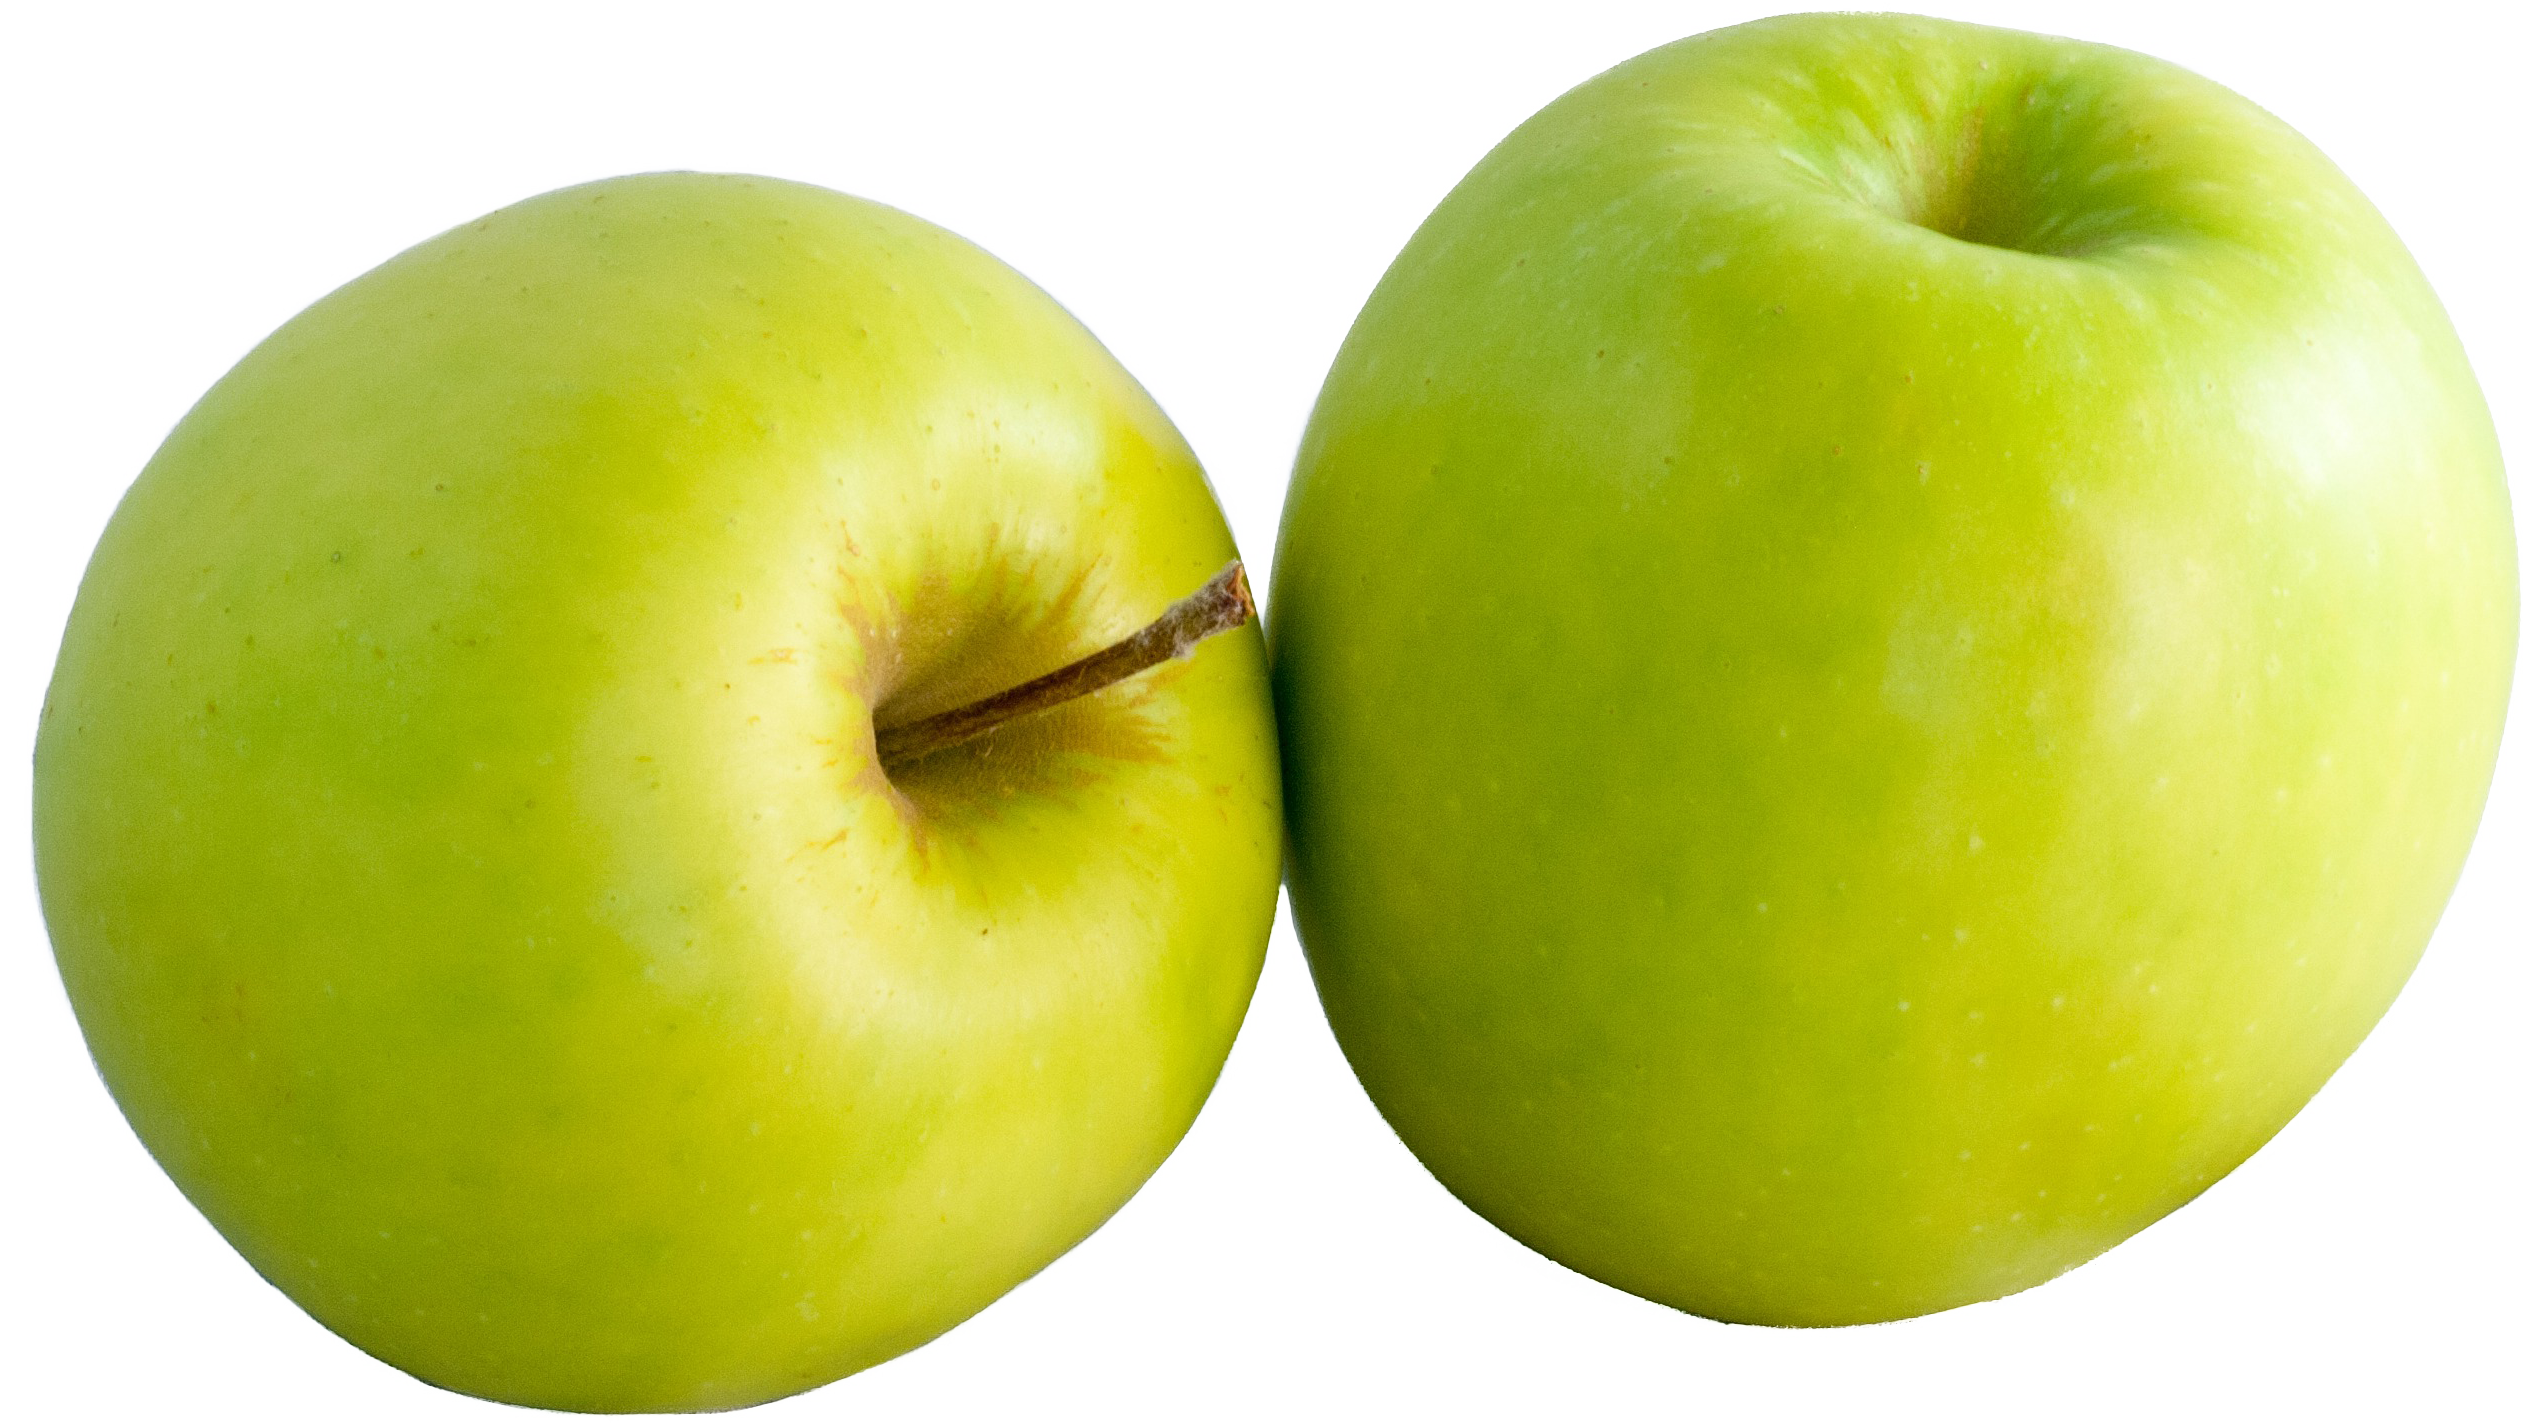 दो हरे सेब